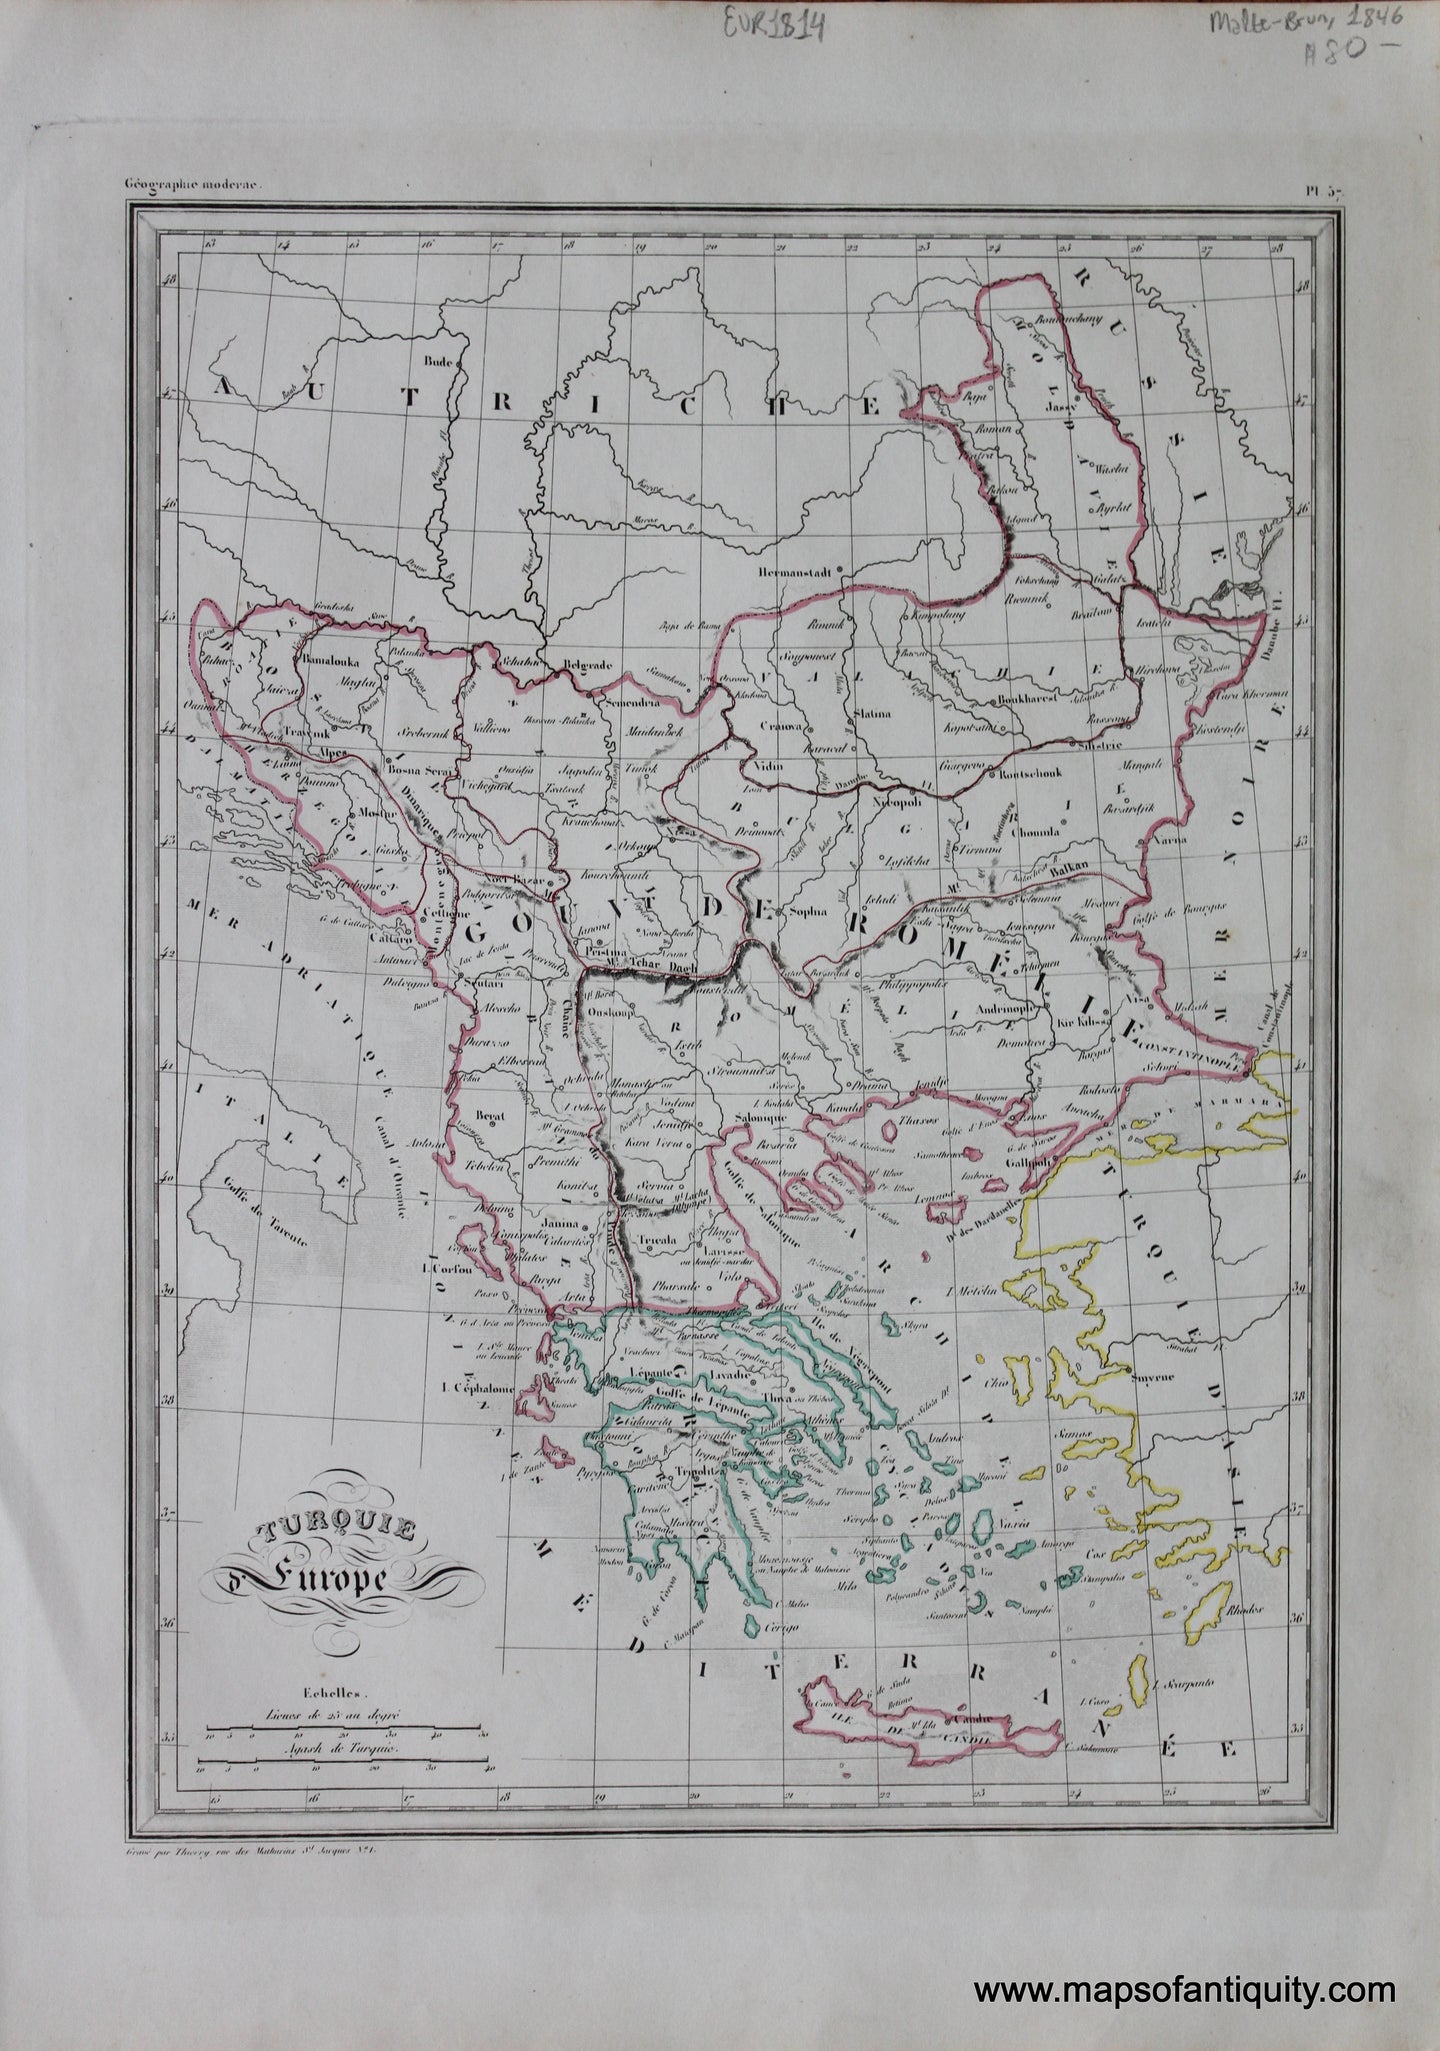 Antique-Hand-Colored-Map-Turquie-Europe-Europe-Turkey-&-the-Mediterranean-1846-M.-Malte-Brun-Maps-Of-Antiquity